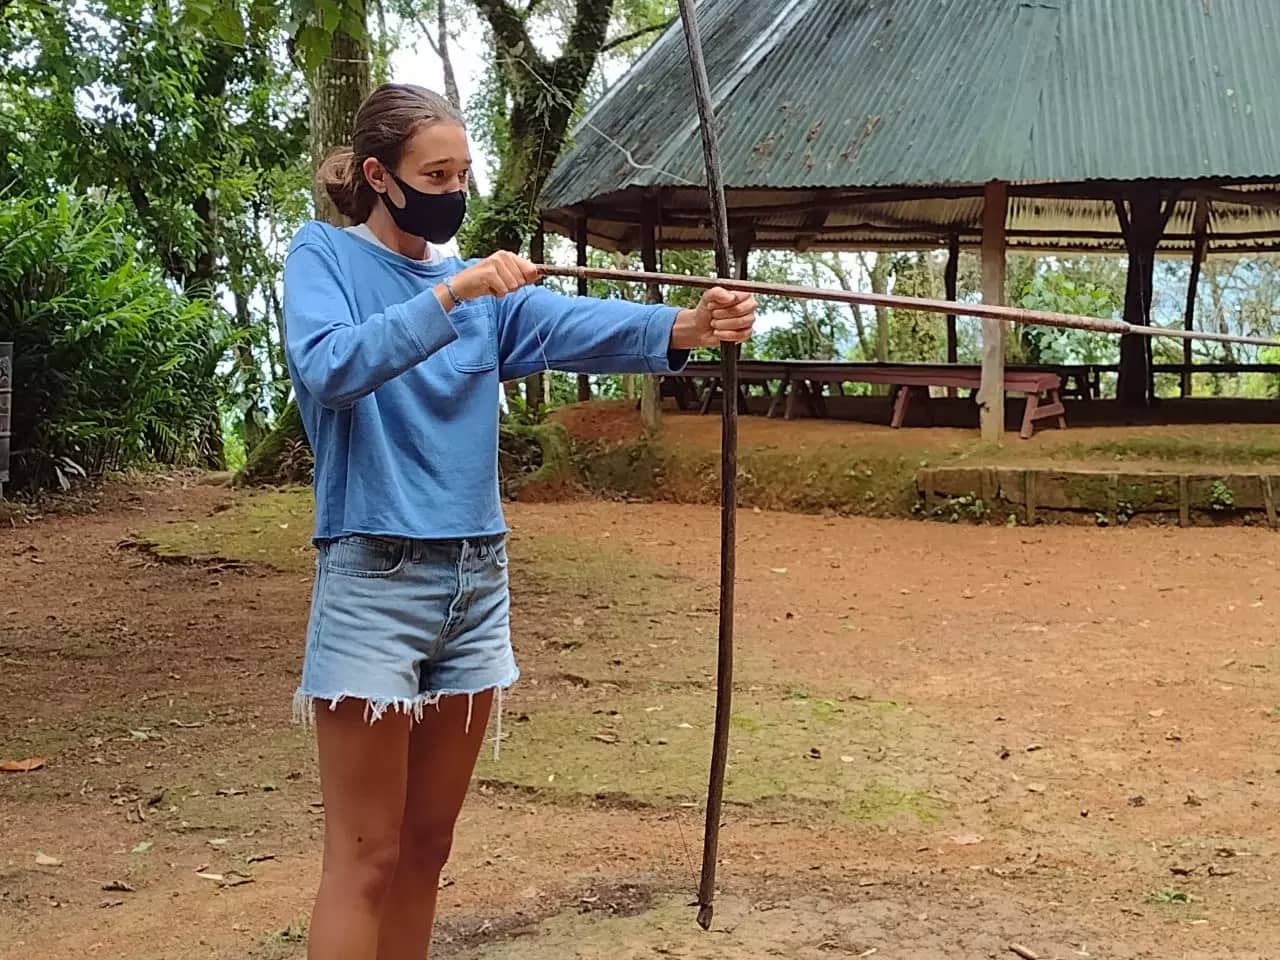 learning archery in costa rica